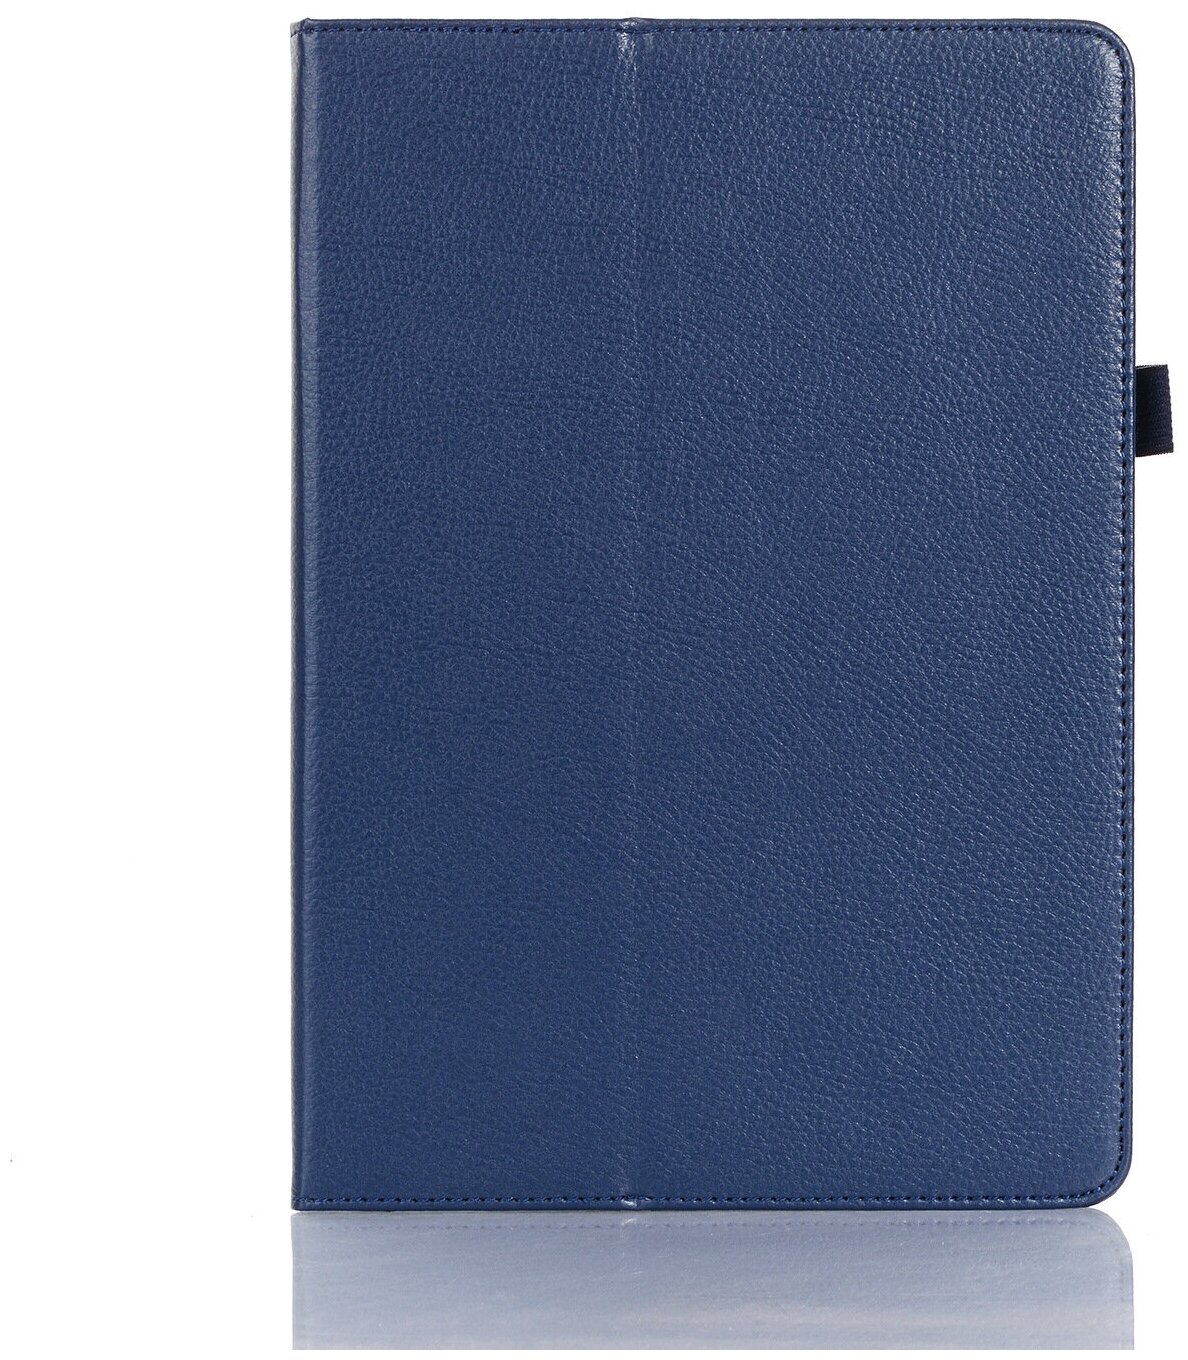 Чехол-обложка с подставкой для Samsung Galaxy Tab A7 10.4 SM-T500 (2020) / Samsung Galaxy Tab A7 10.4 SM-T500 / T505 (2020) синий кожаный